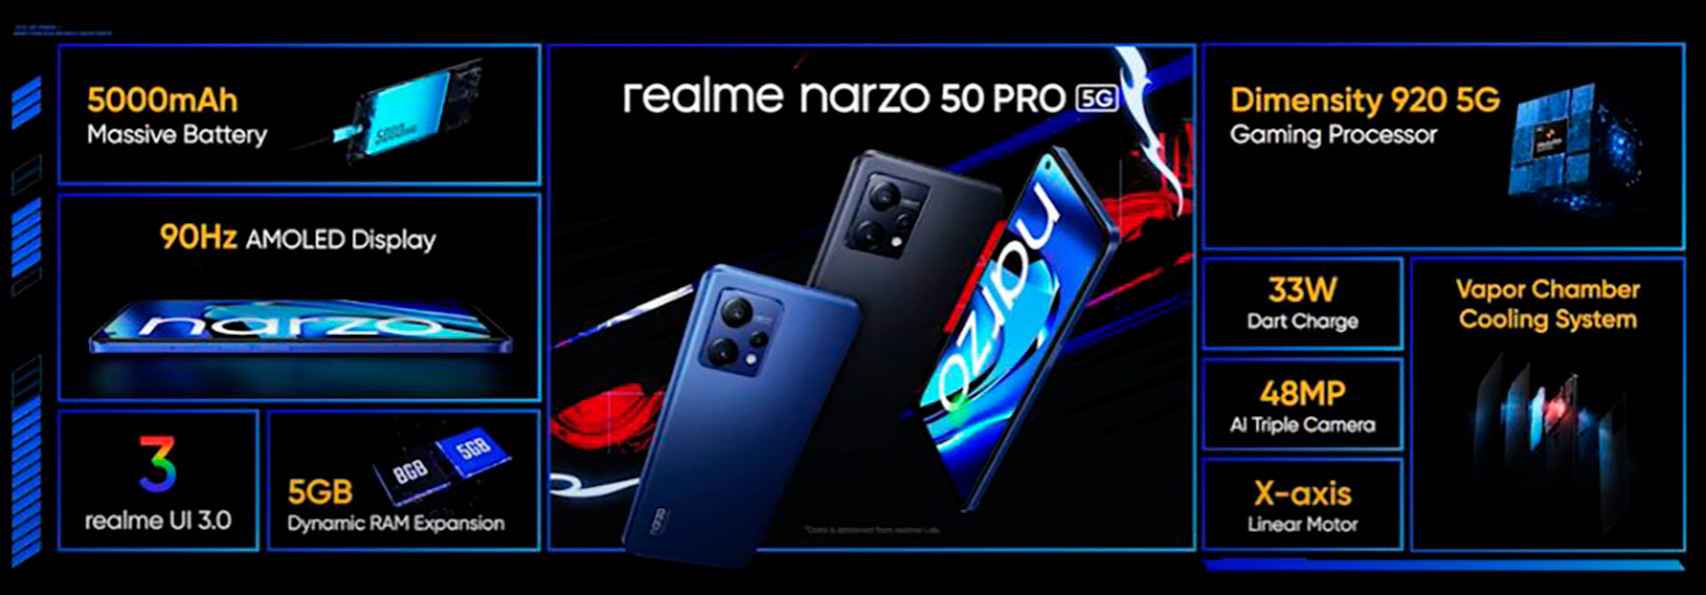 Realme Narzo 50 Pro 5G Specifications